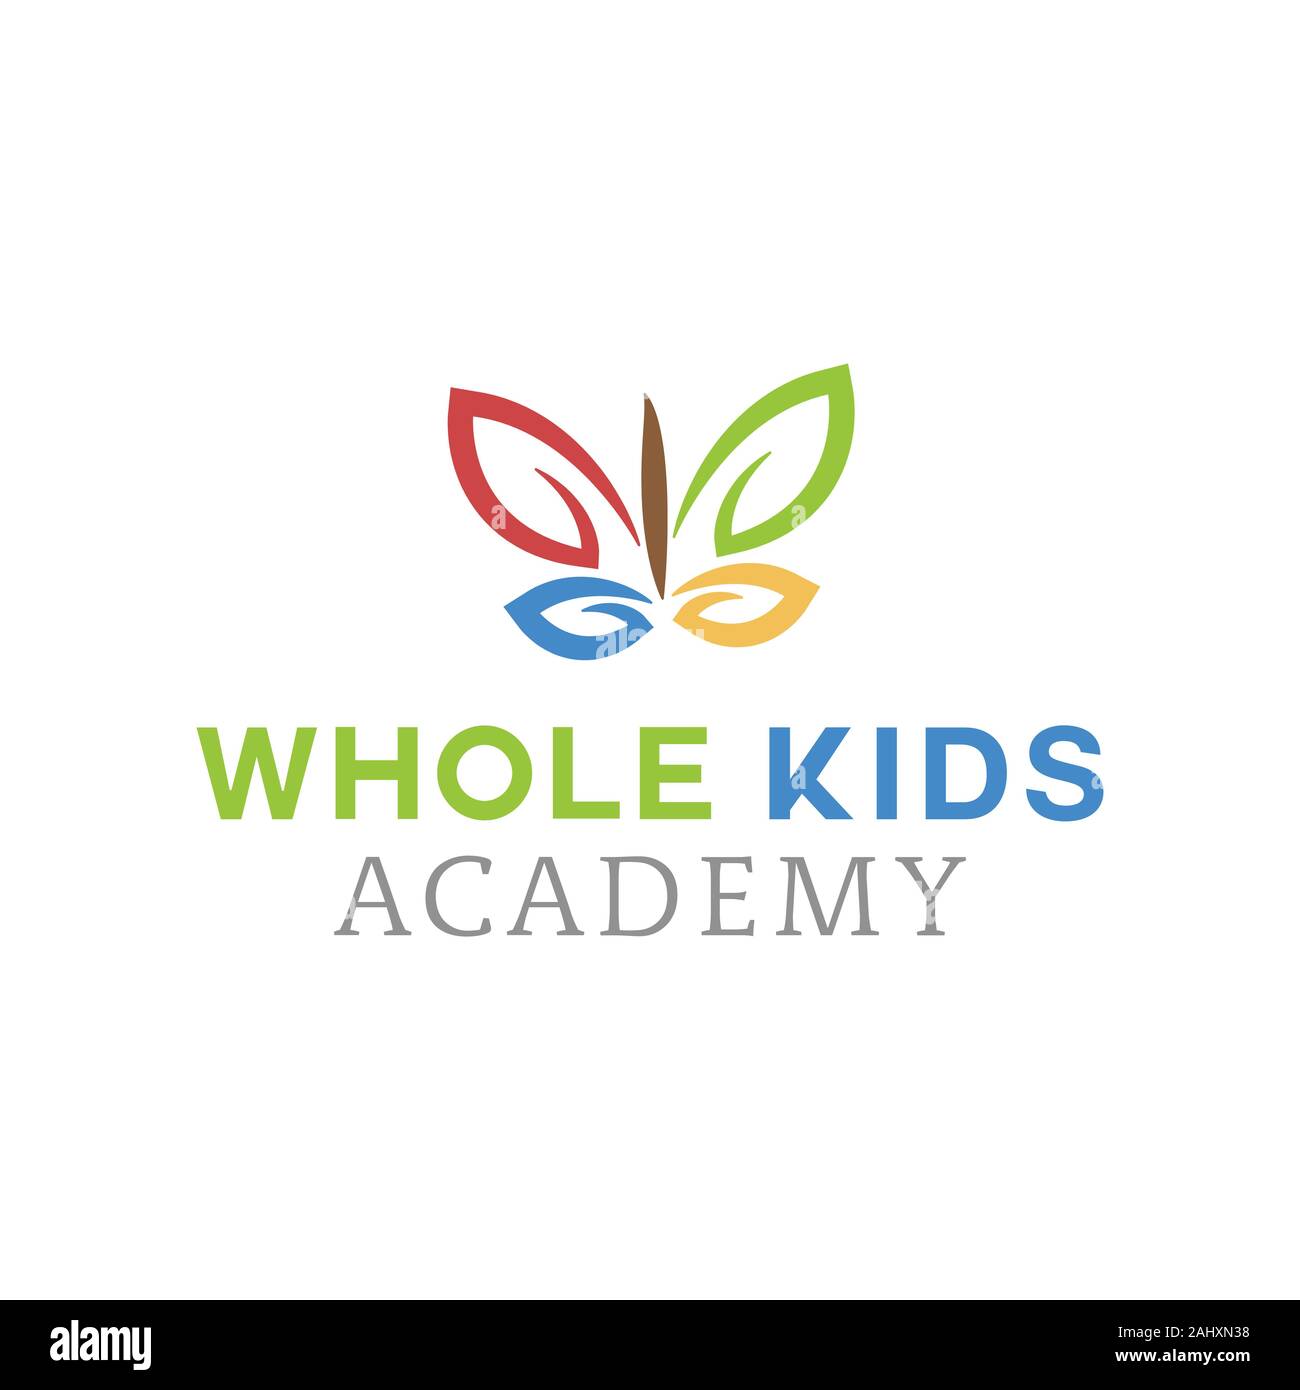 Whole Kids Academy logo design, colorful logo inspiration Stock Vector